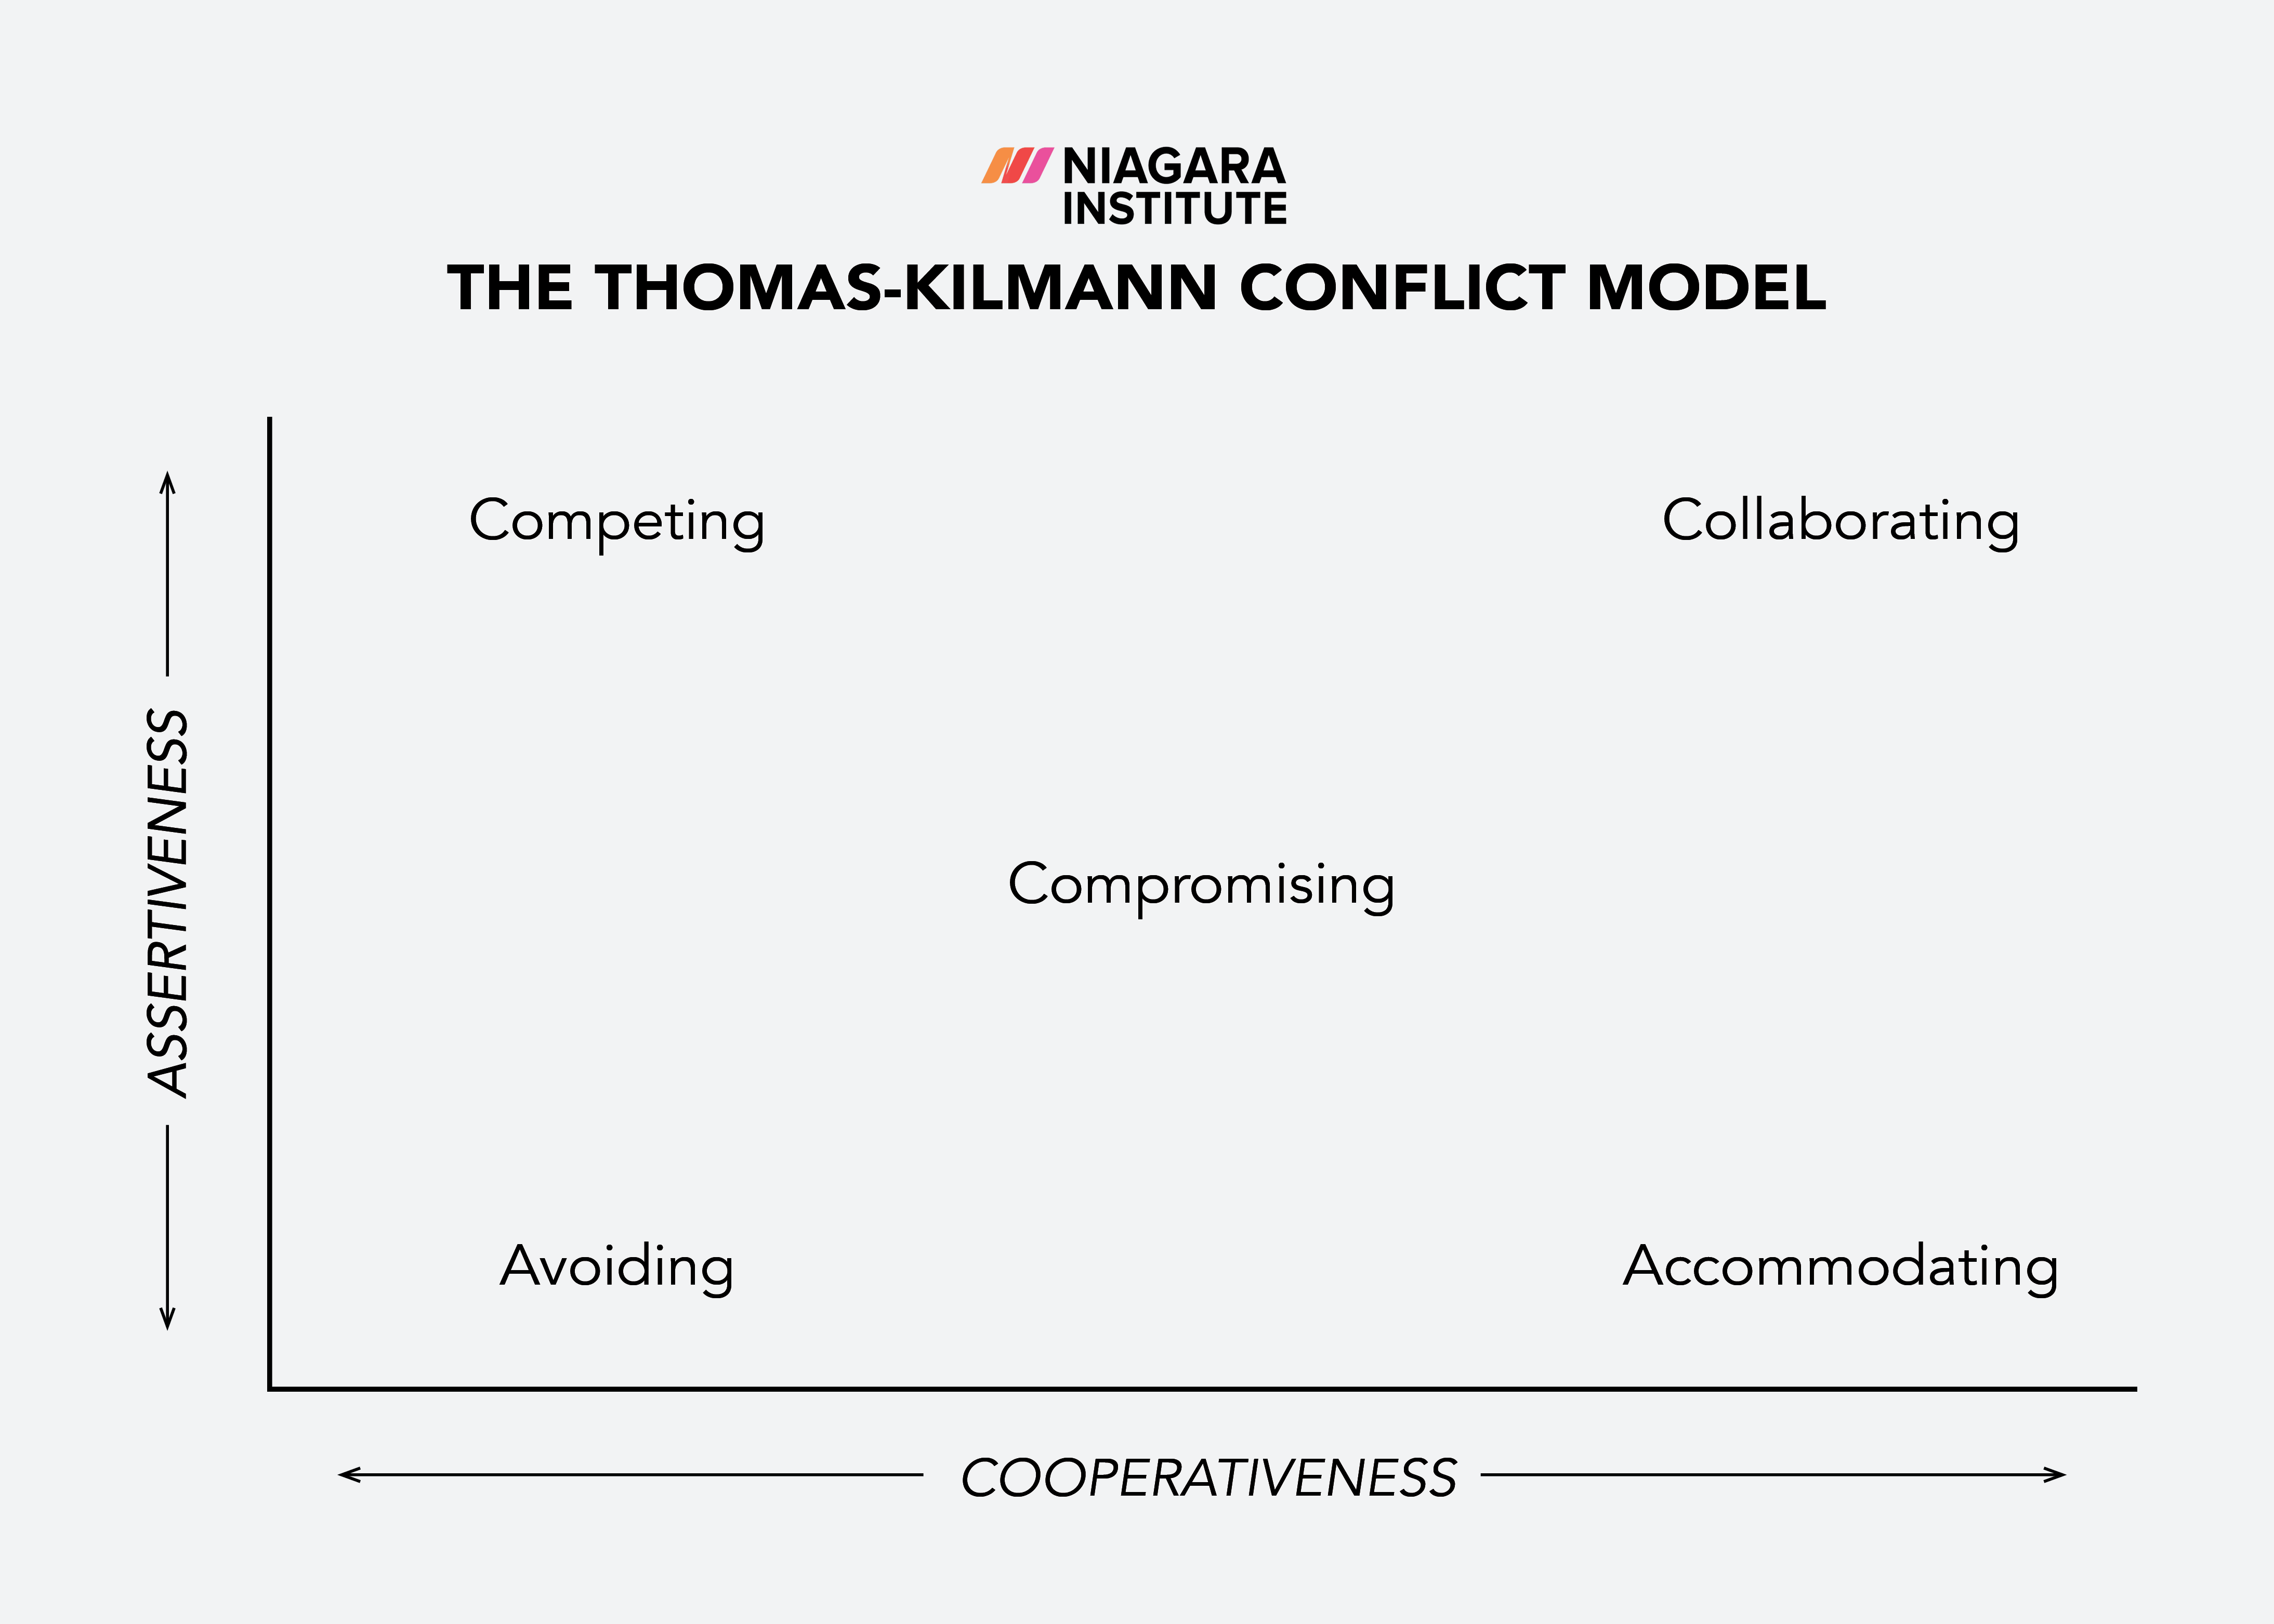 Thomas-Kilmann Conflict Model Accommodating Style